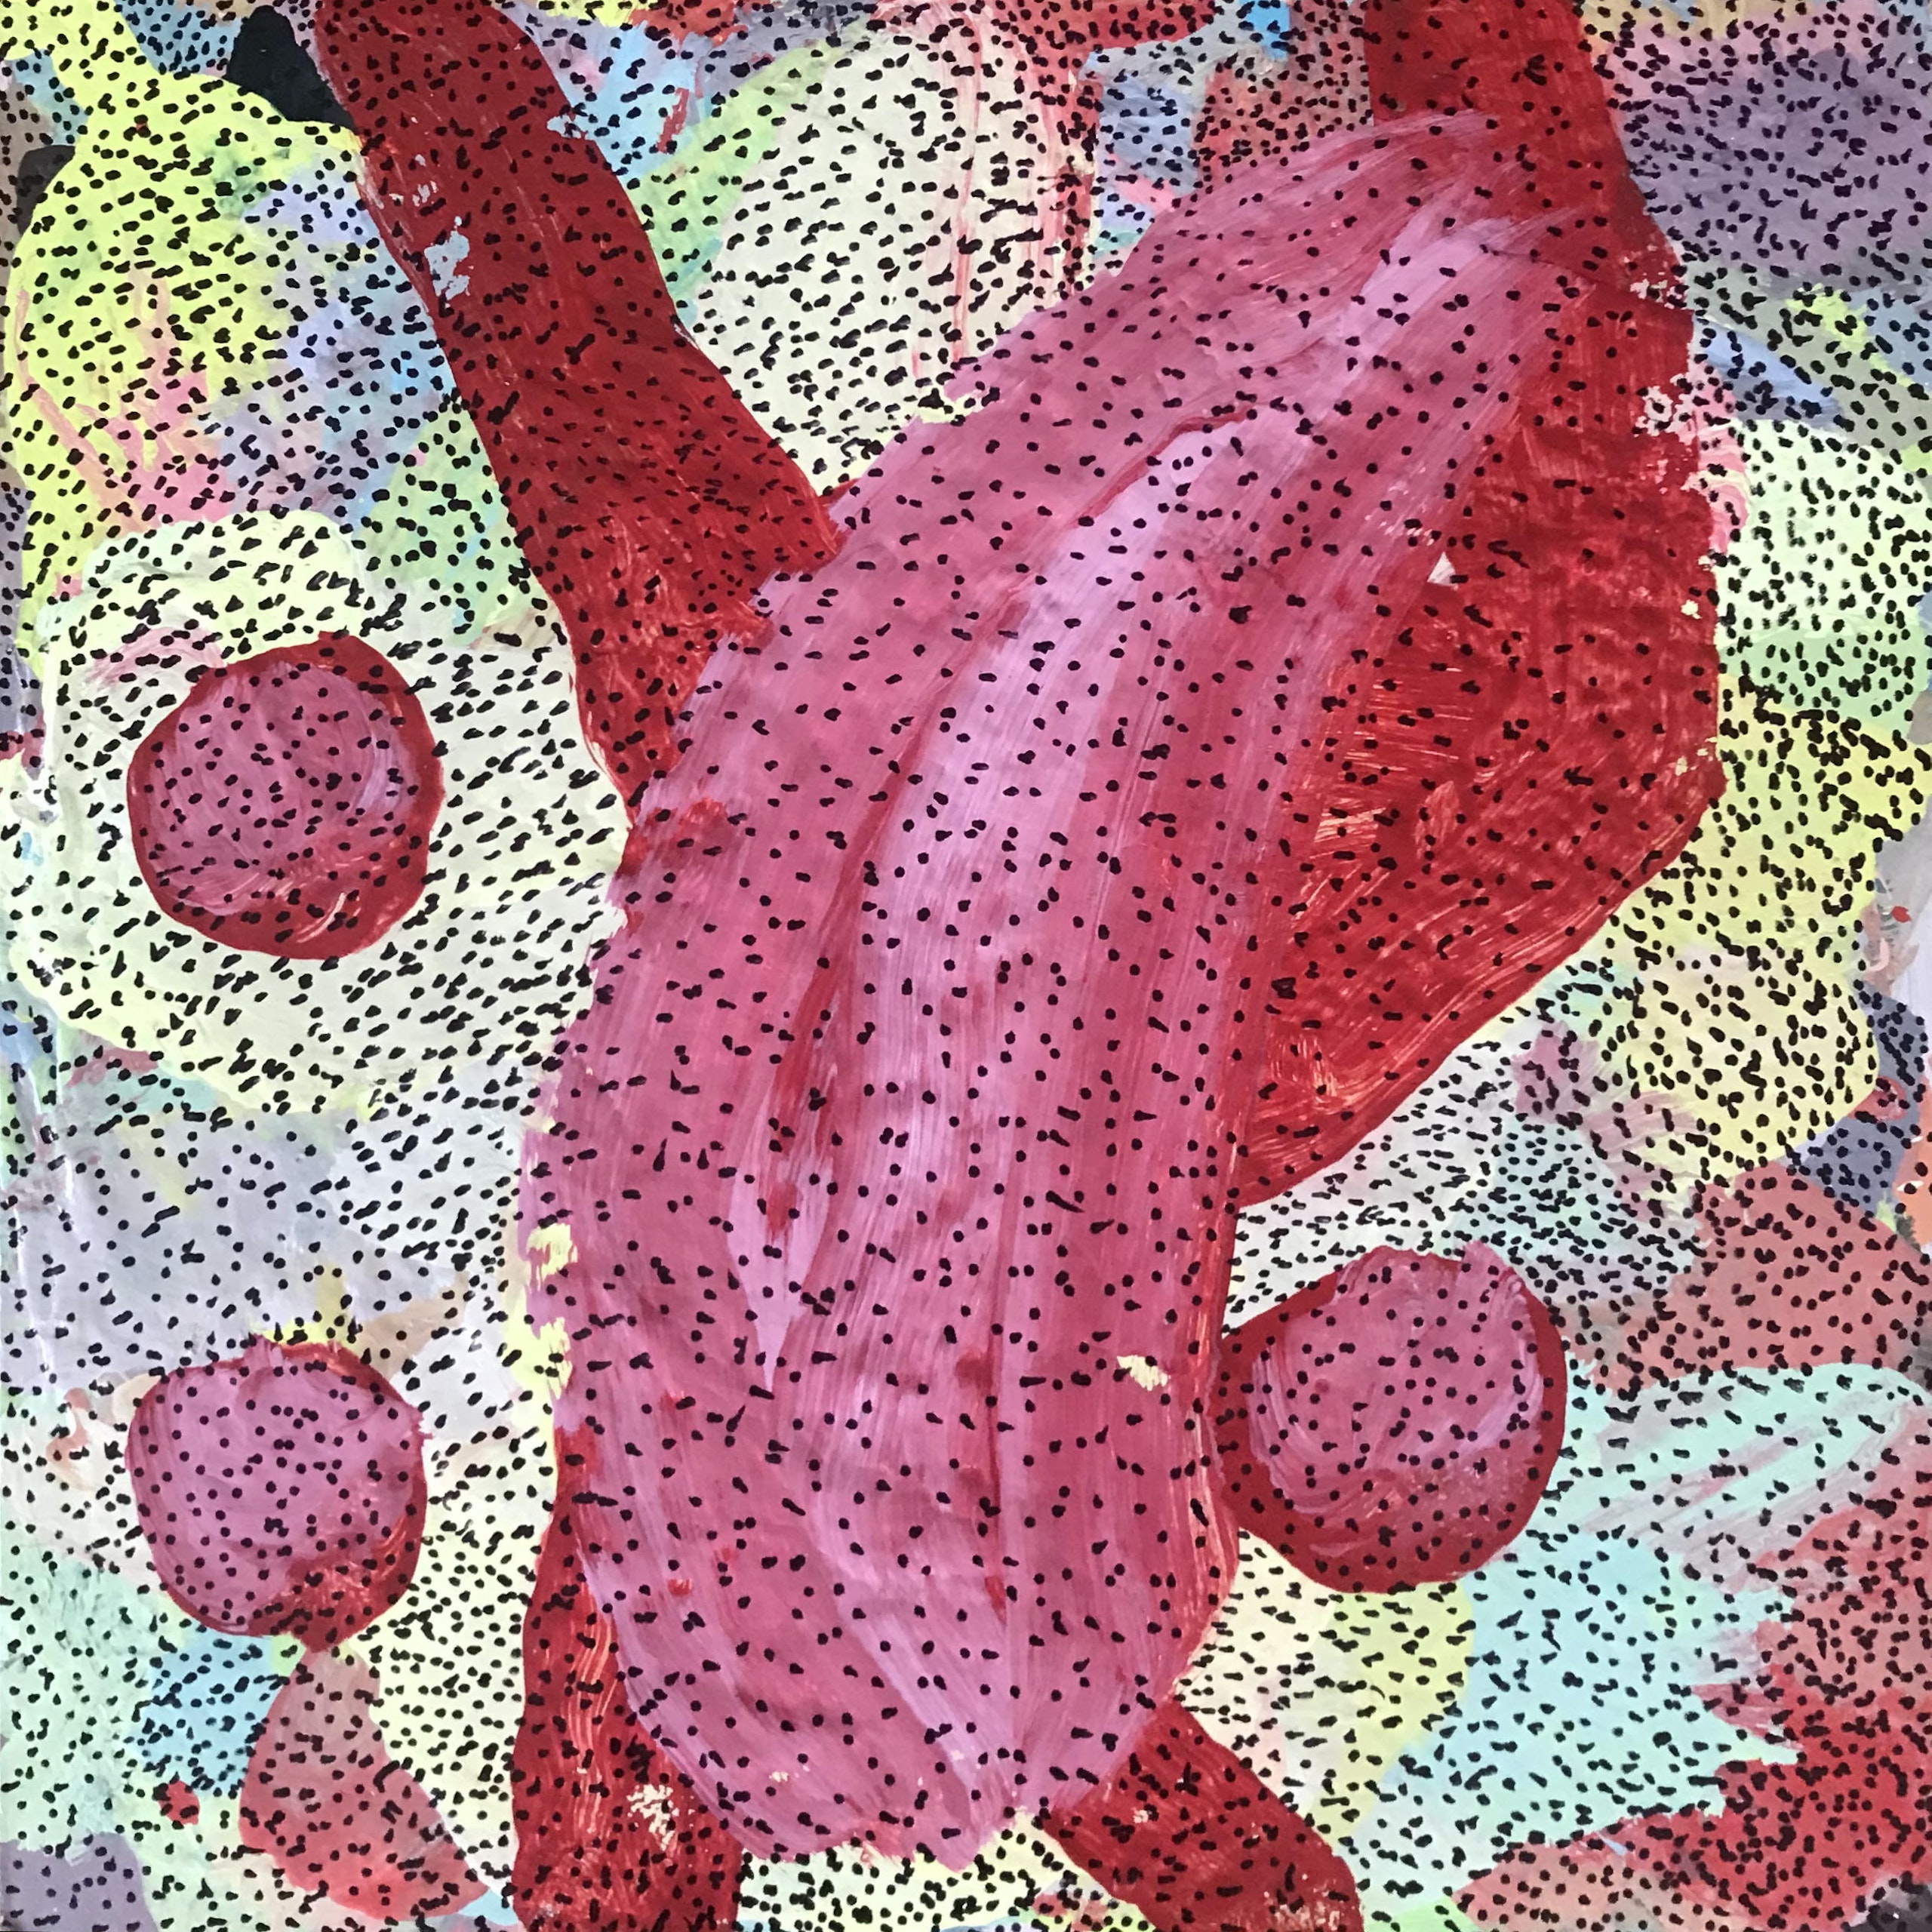 Coral Spawn by John Reid.